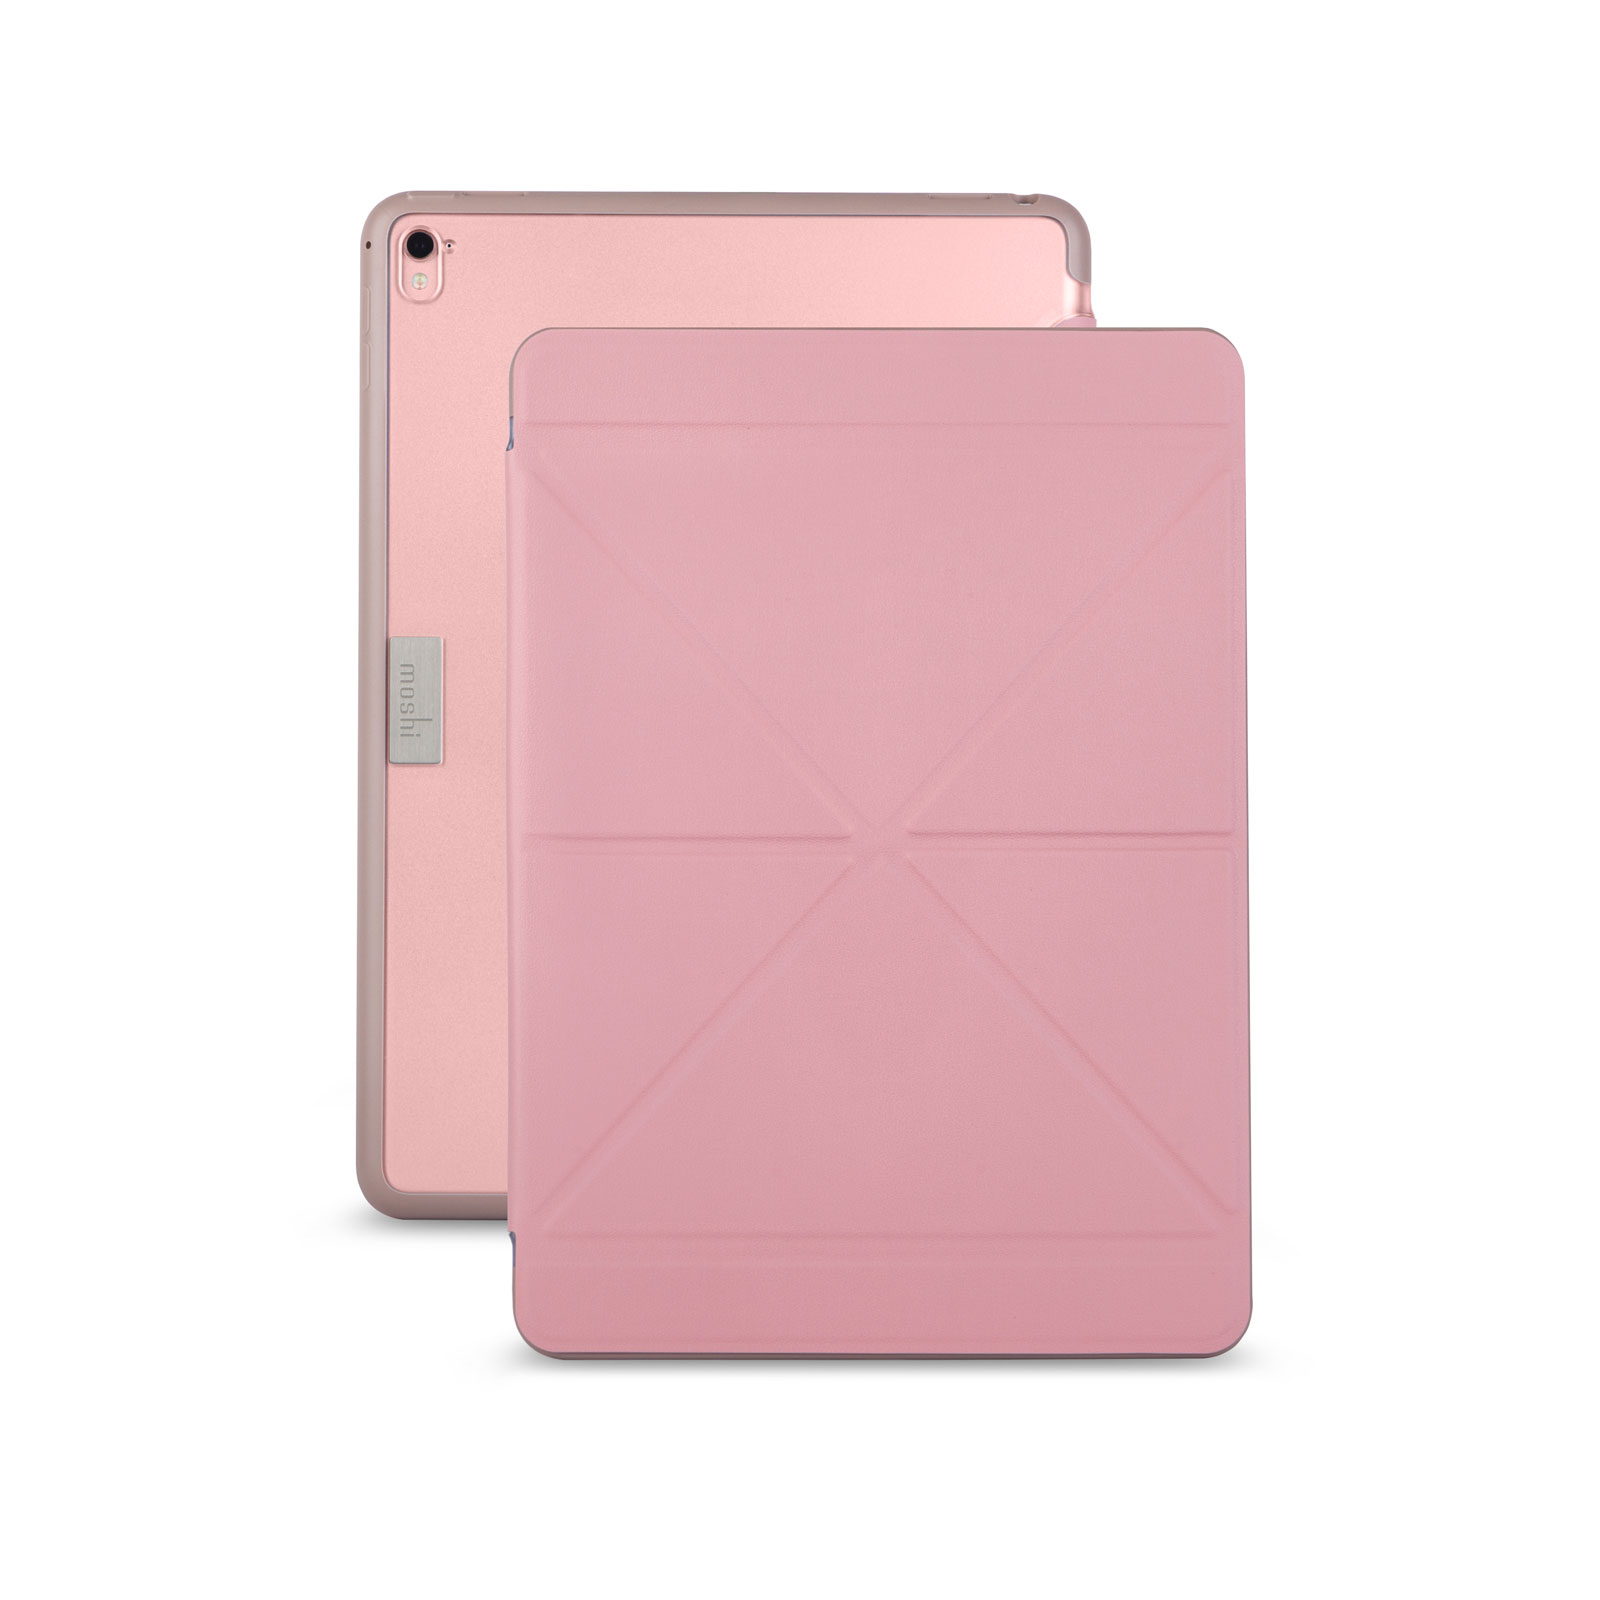 Moshi Versa Case for iPad 9.7 inch